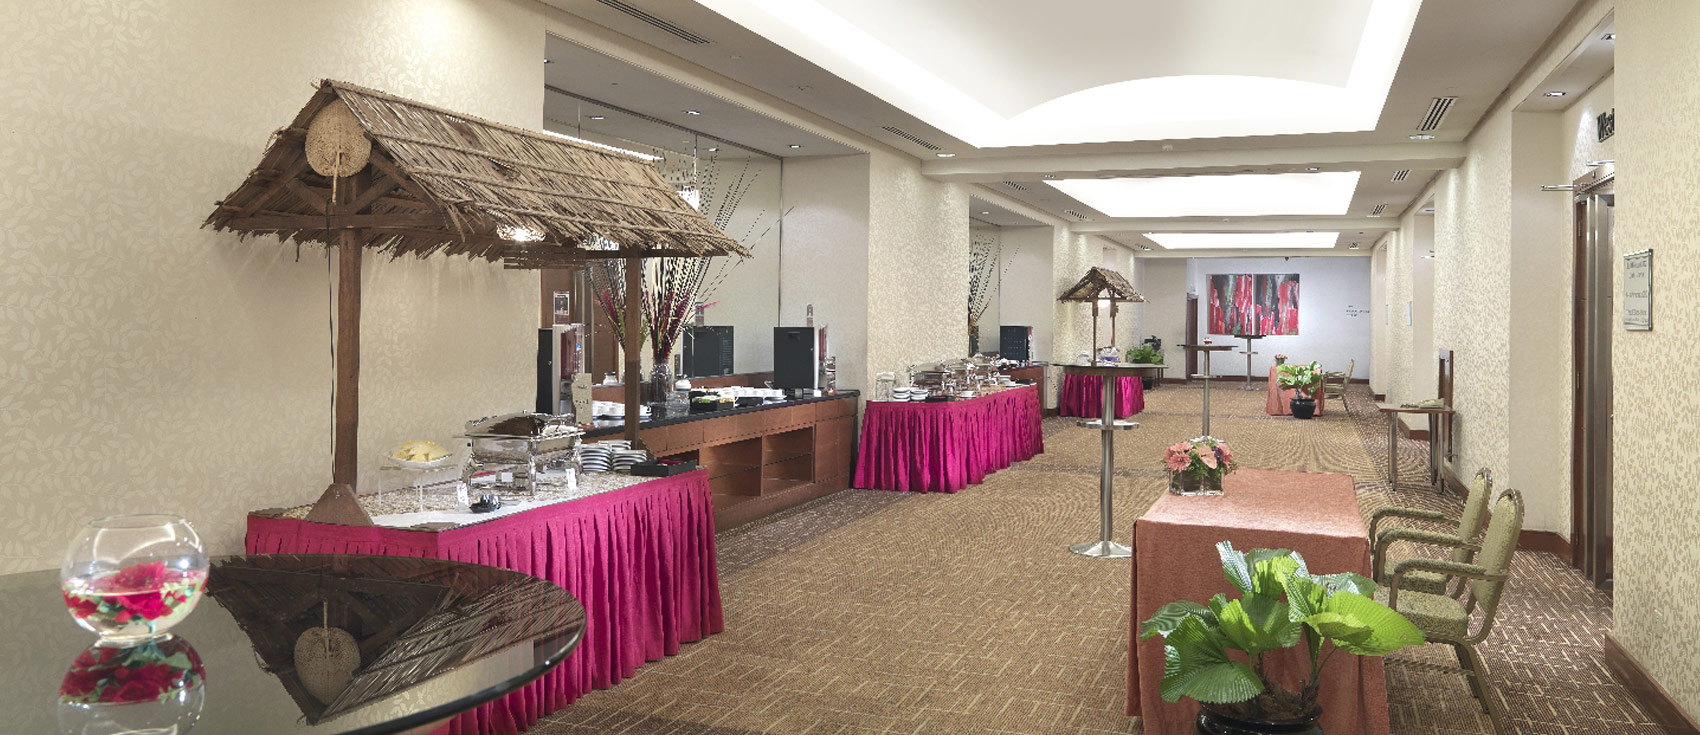 تور مالزي هتل بولوارد اس تی جیلس پریمیر- آژانس مسافرتي و هواپيمايي آفتاب ساحل آبي